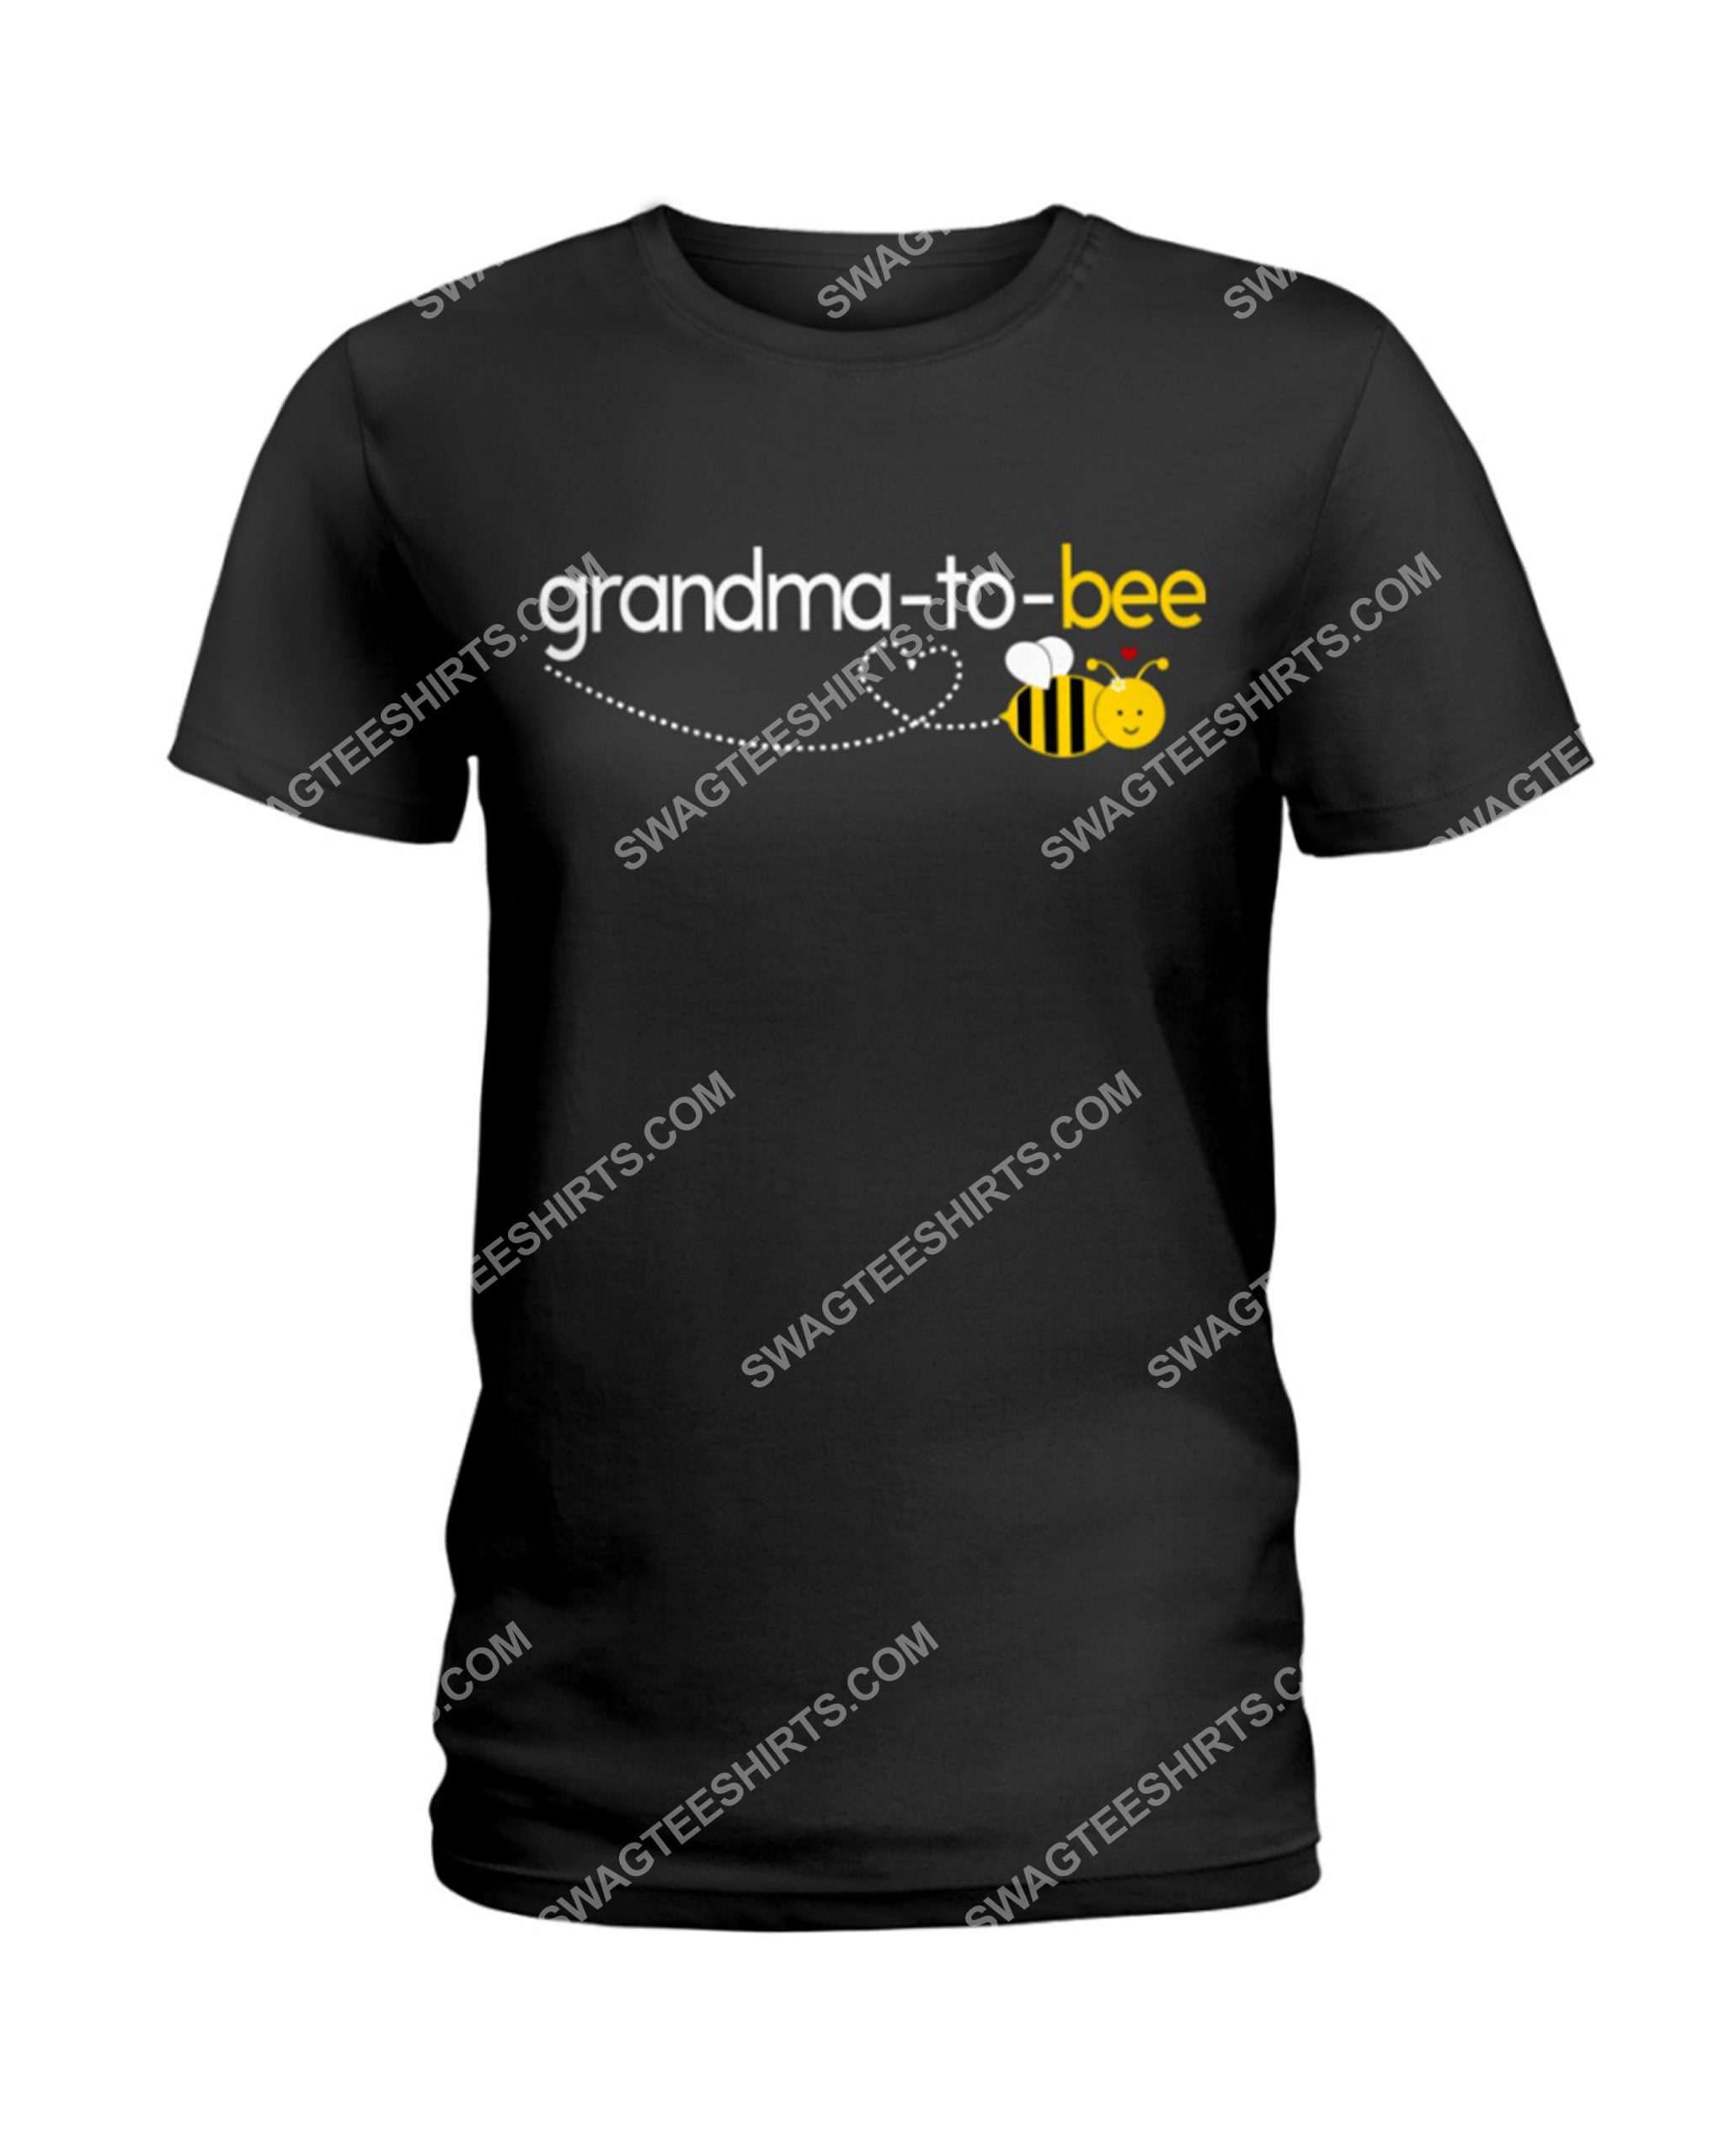 grandma to bee shirt 1(1)